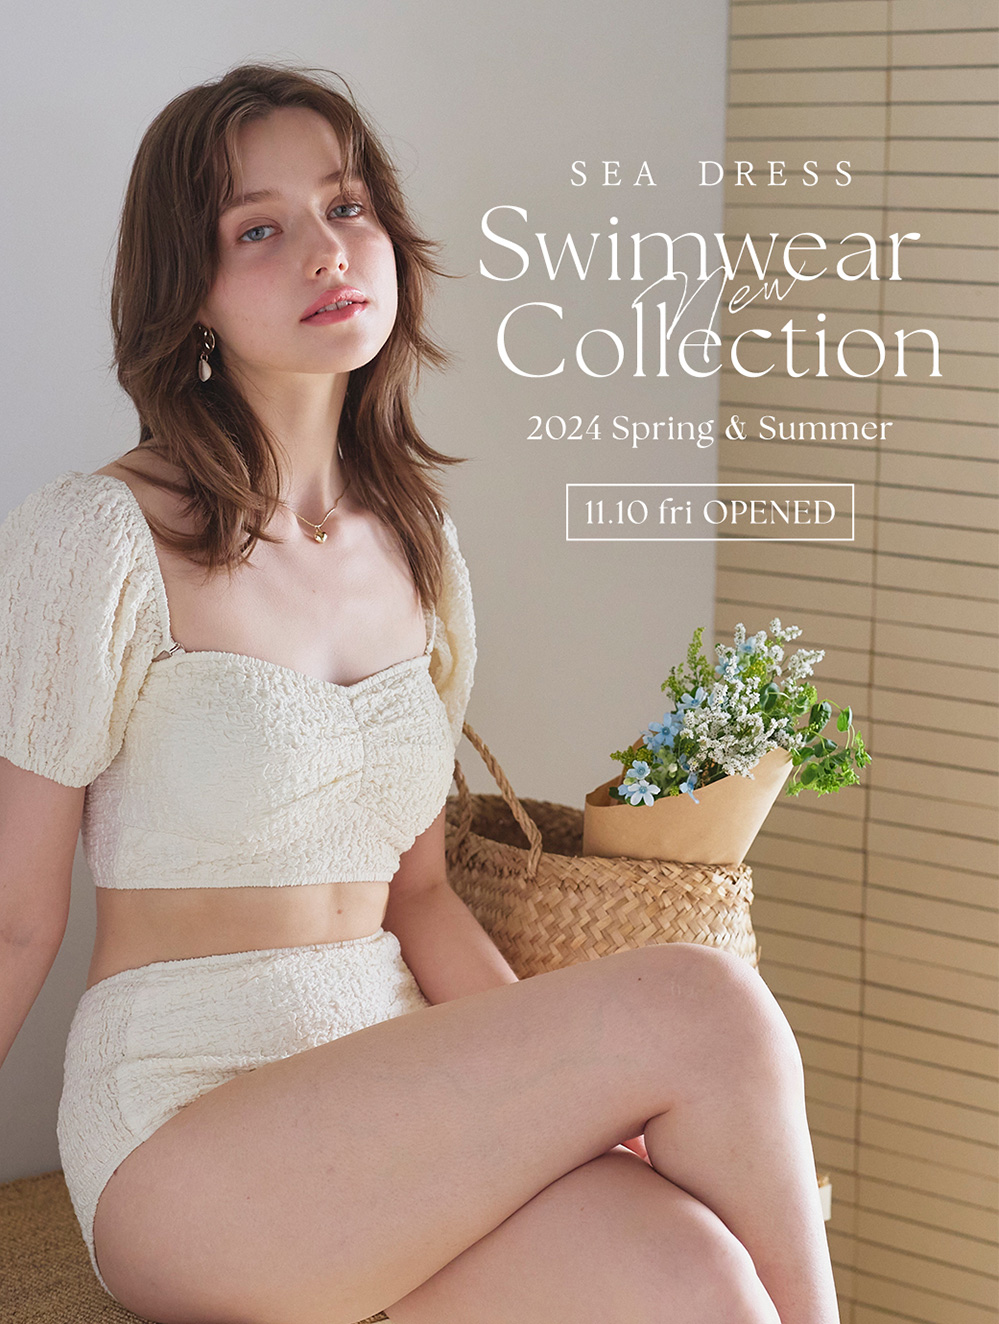 Swimwear Collection 2024